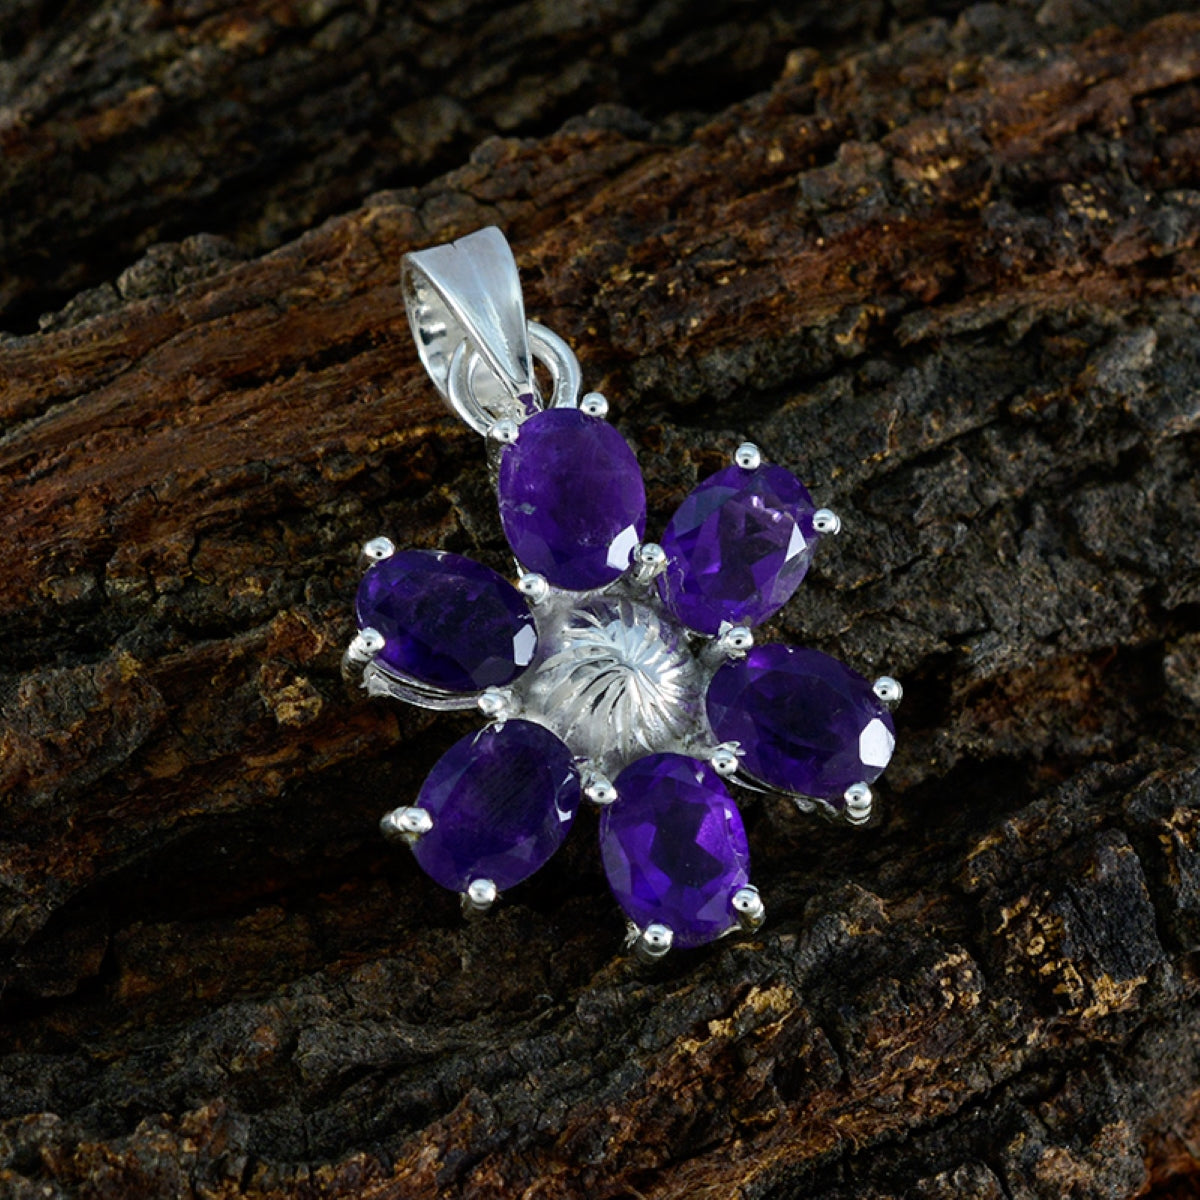 Riyo Pleasing Gems Oval facettierter lila Amethyst-Silberanhänger, Geschenk zur Verlobung